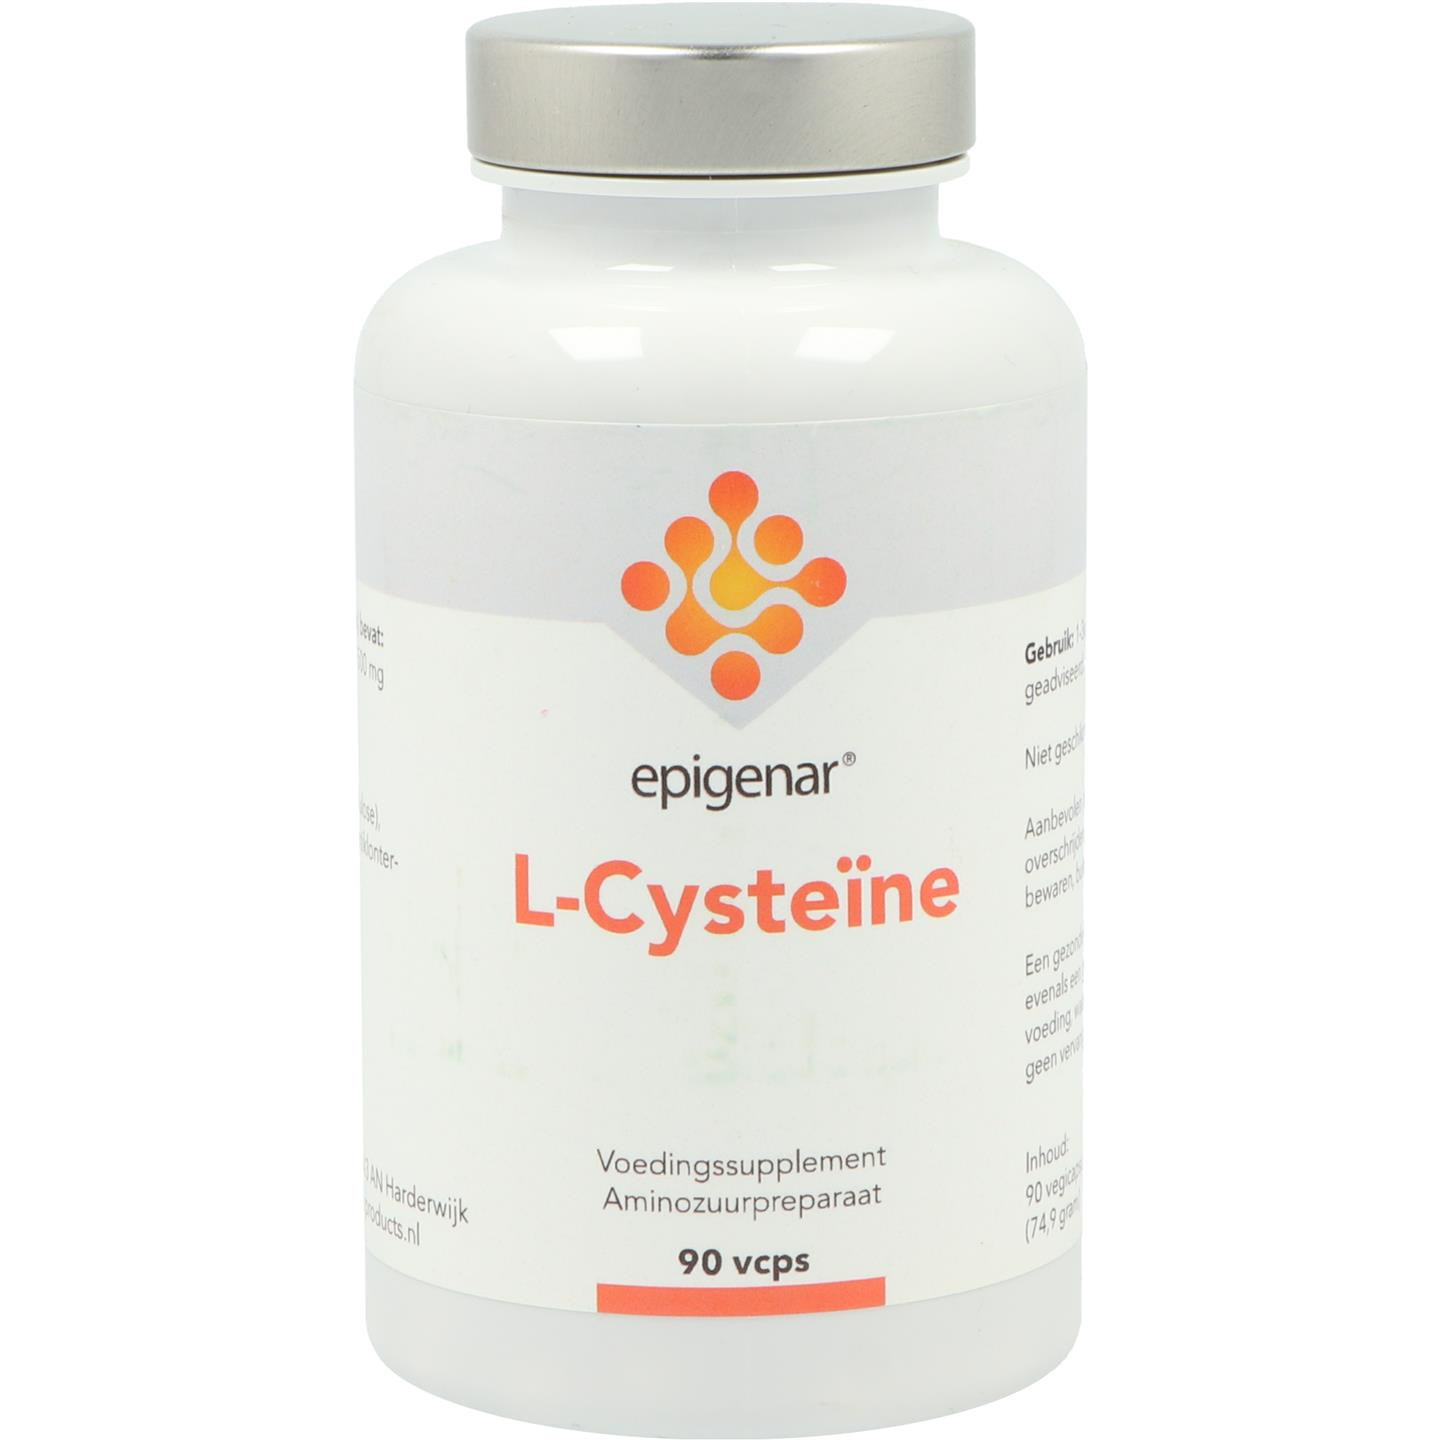 L-Cysteïne